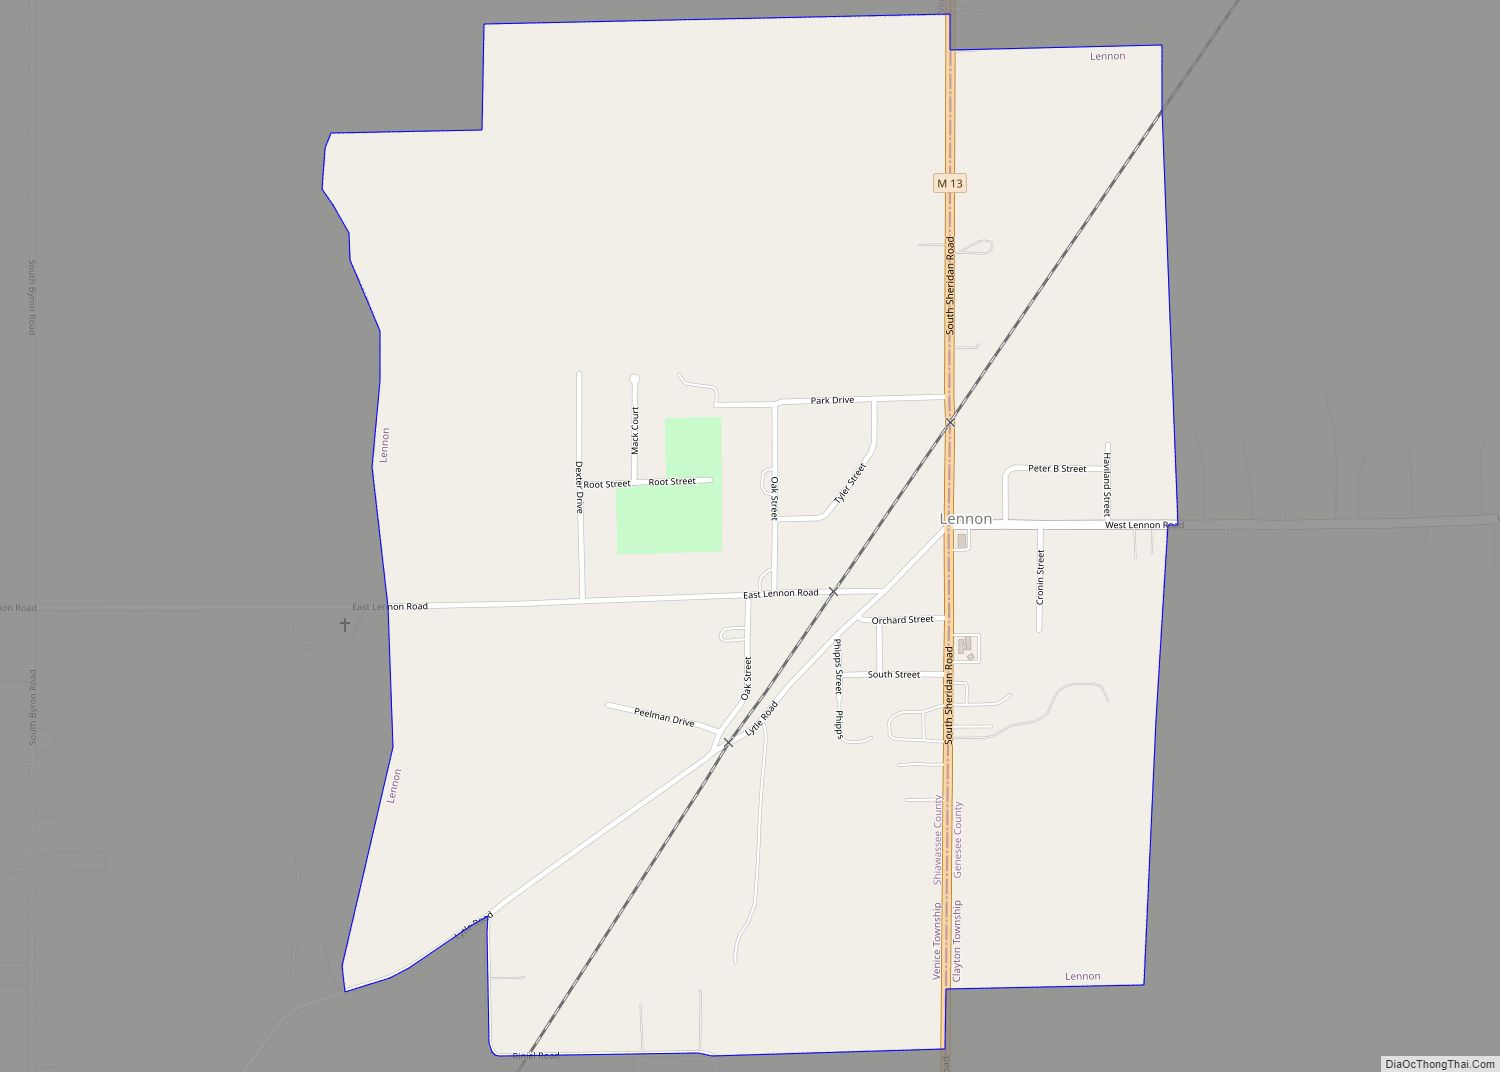 Map of Lennon village